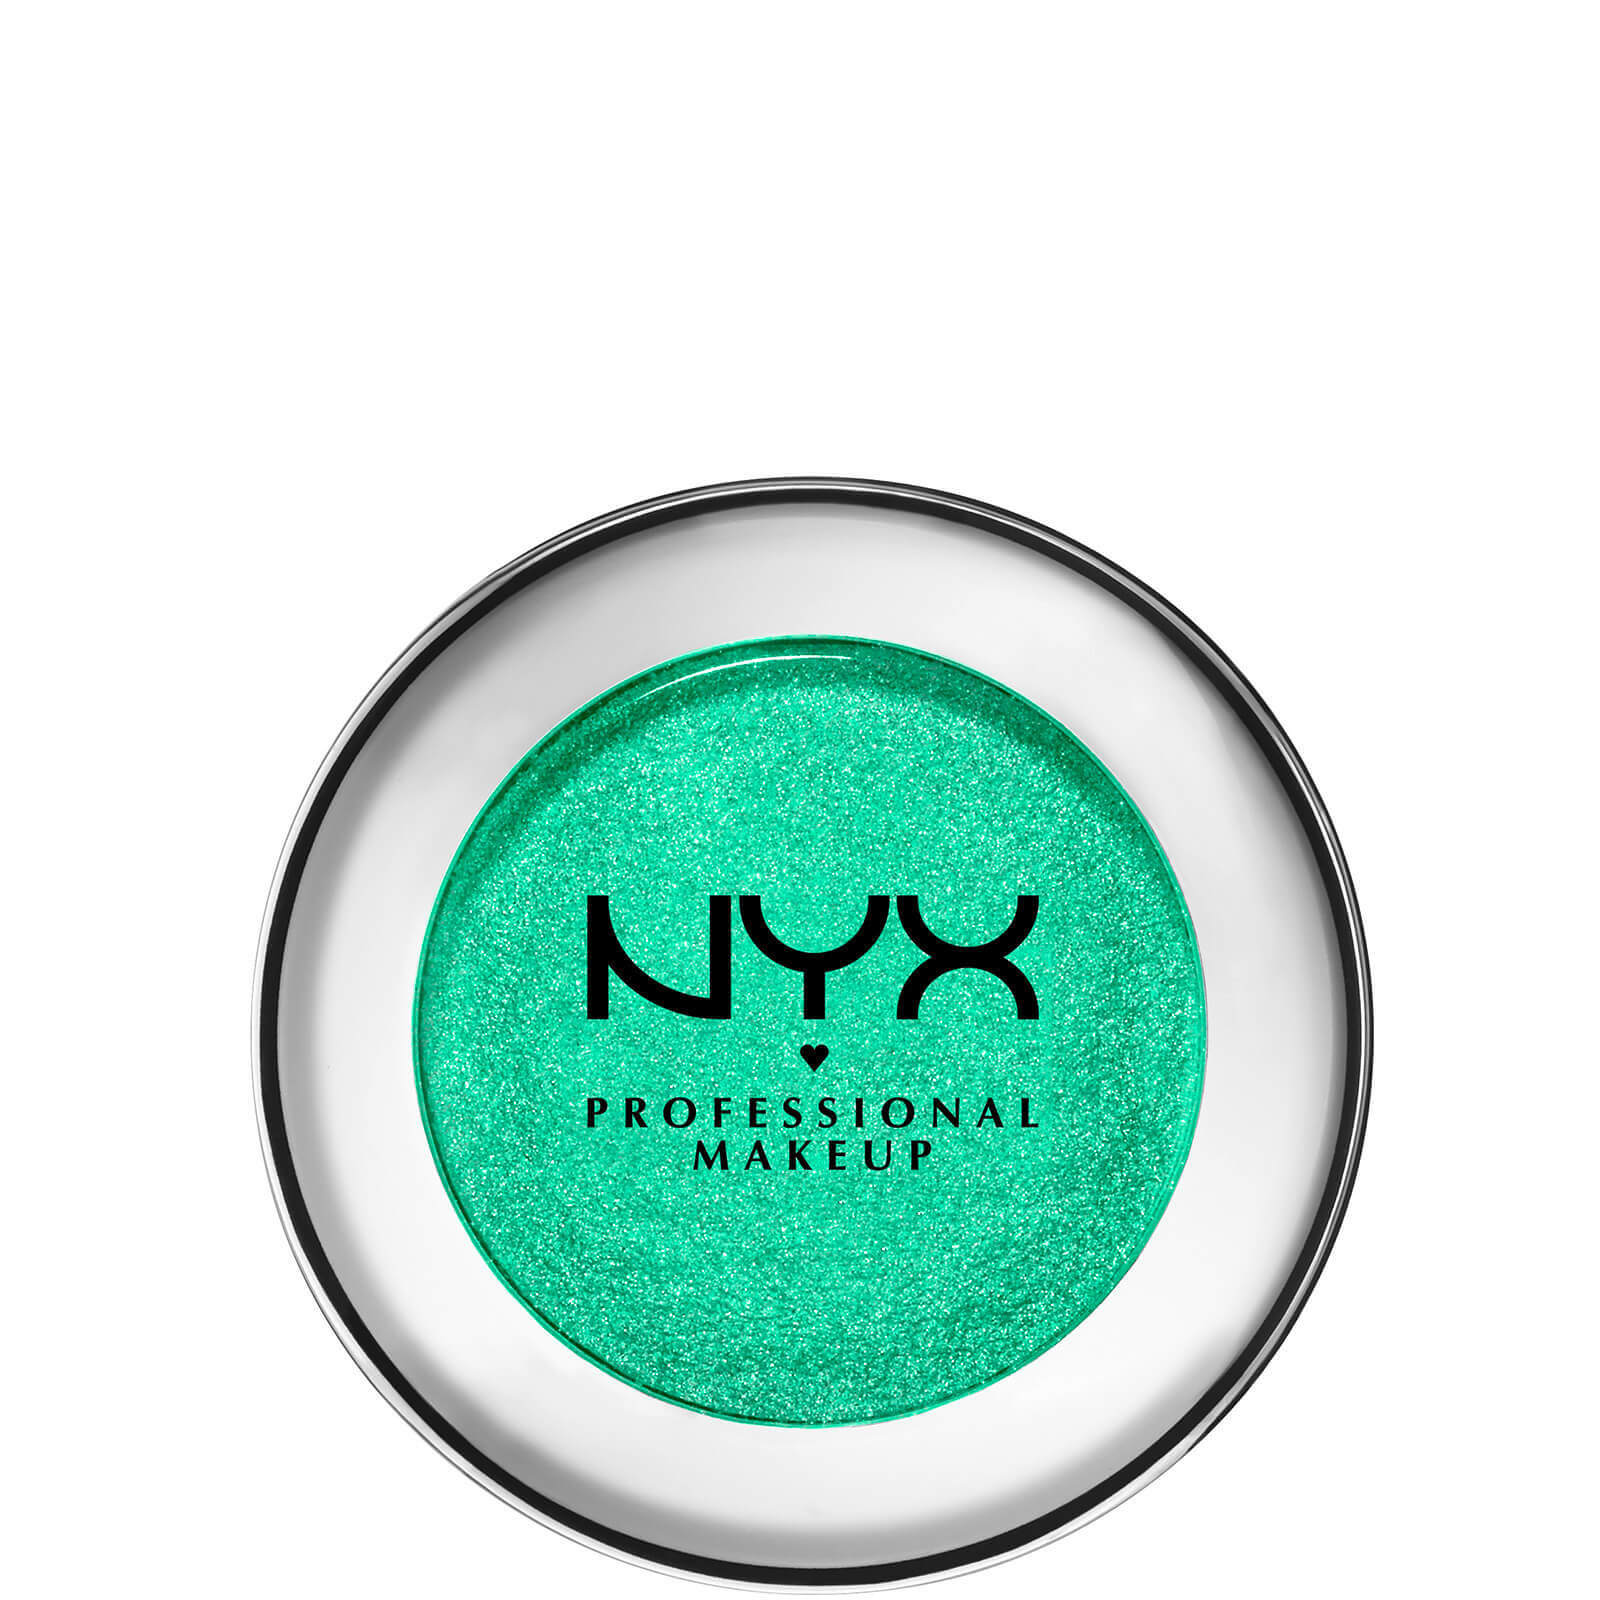 Nyx Professional Makeup Prismatic Eye Shadow (Various Shades) - Mermaid